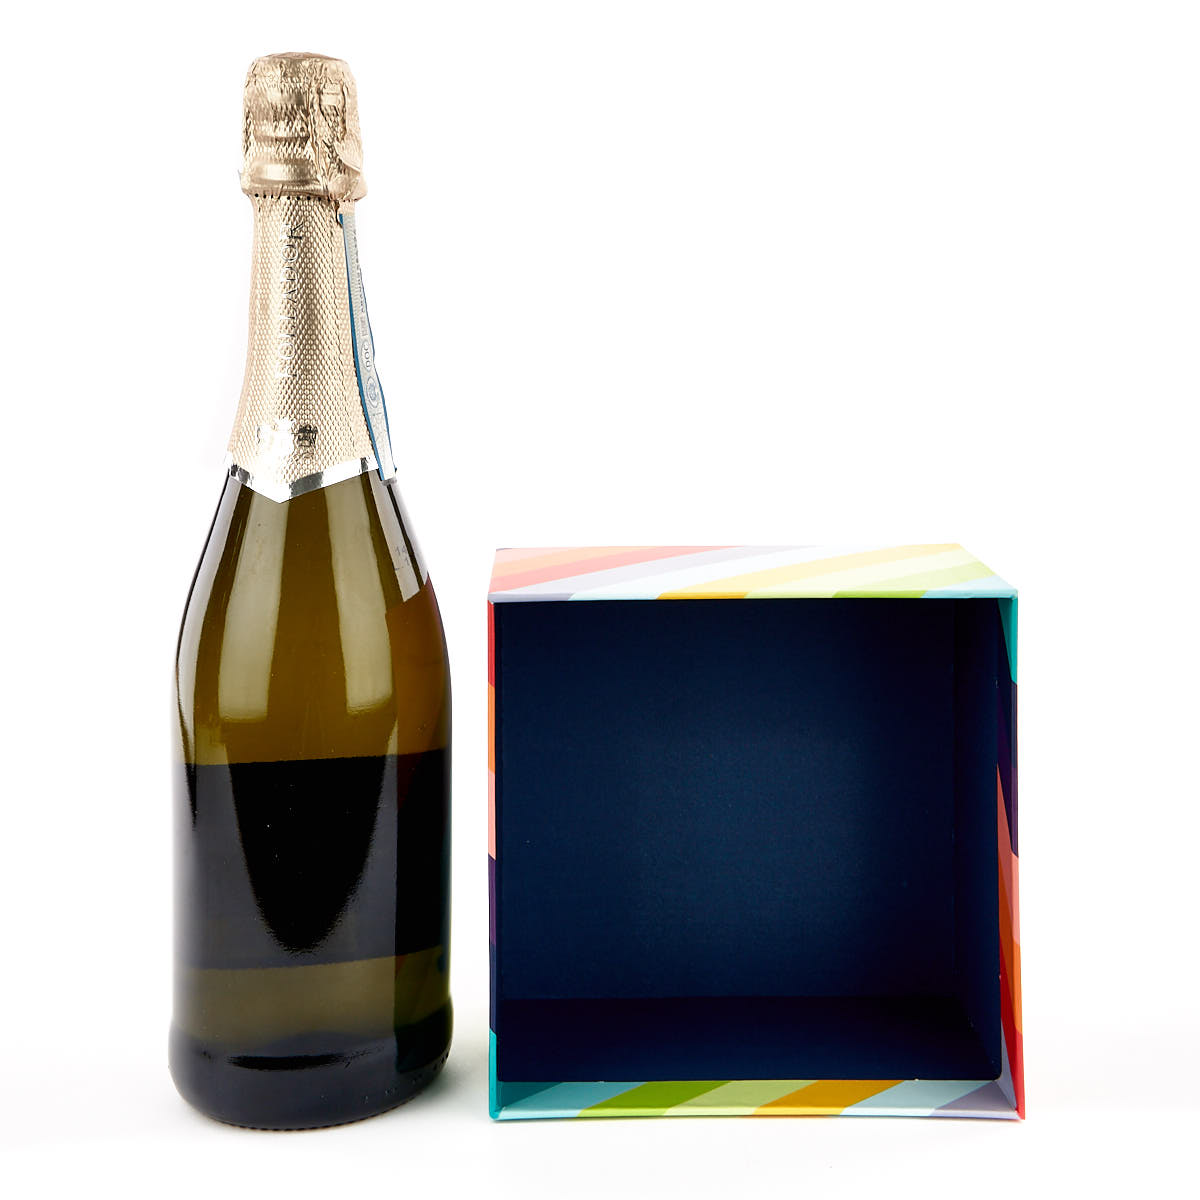 Luxury Gift Box Set Of Four - Rainbow Stripes